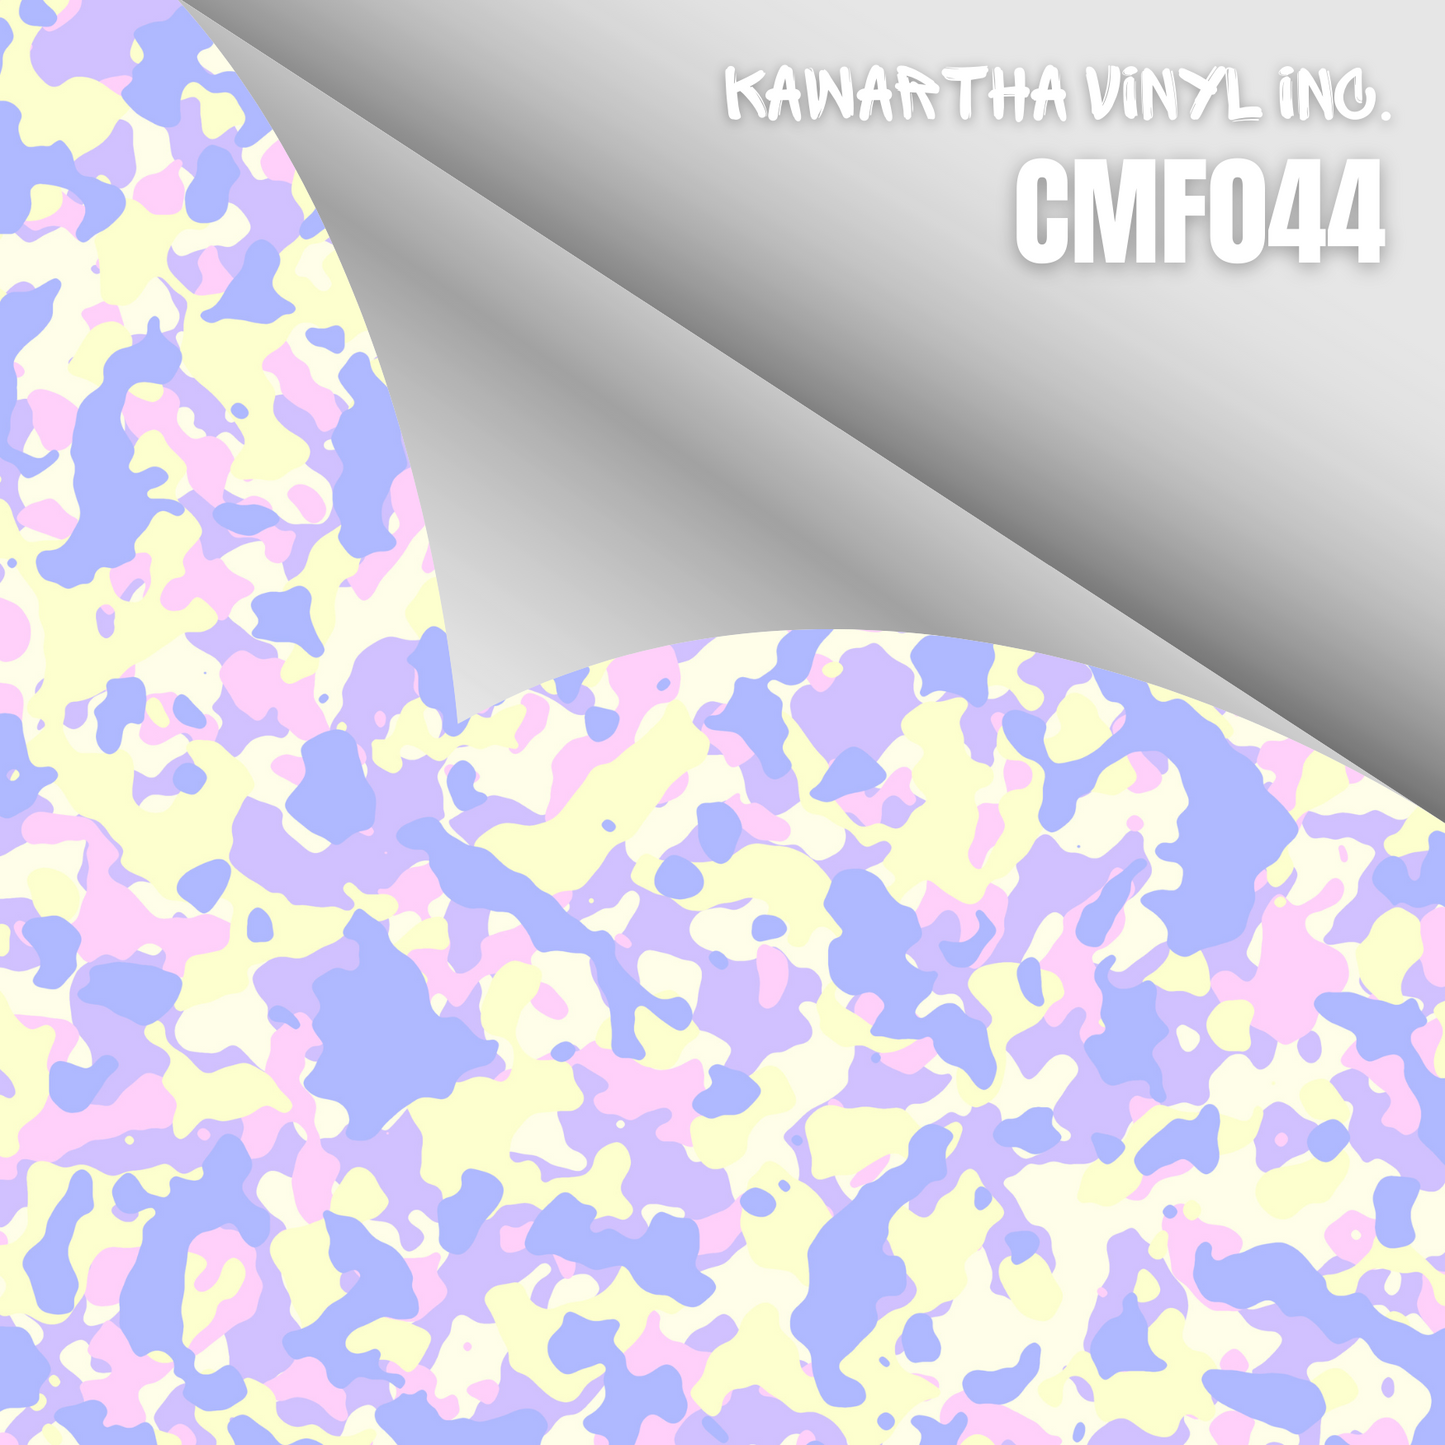 CMF044 Adhesive & HTV Patterns